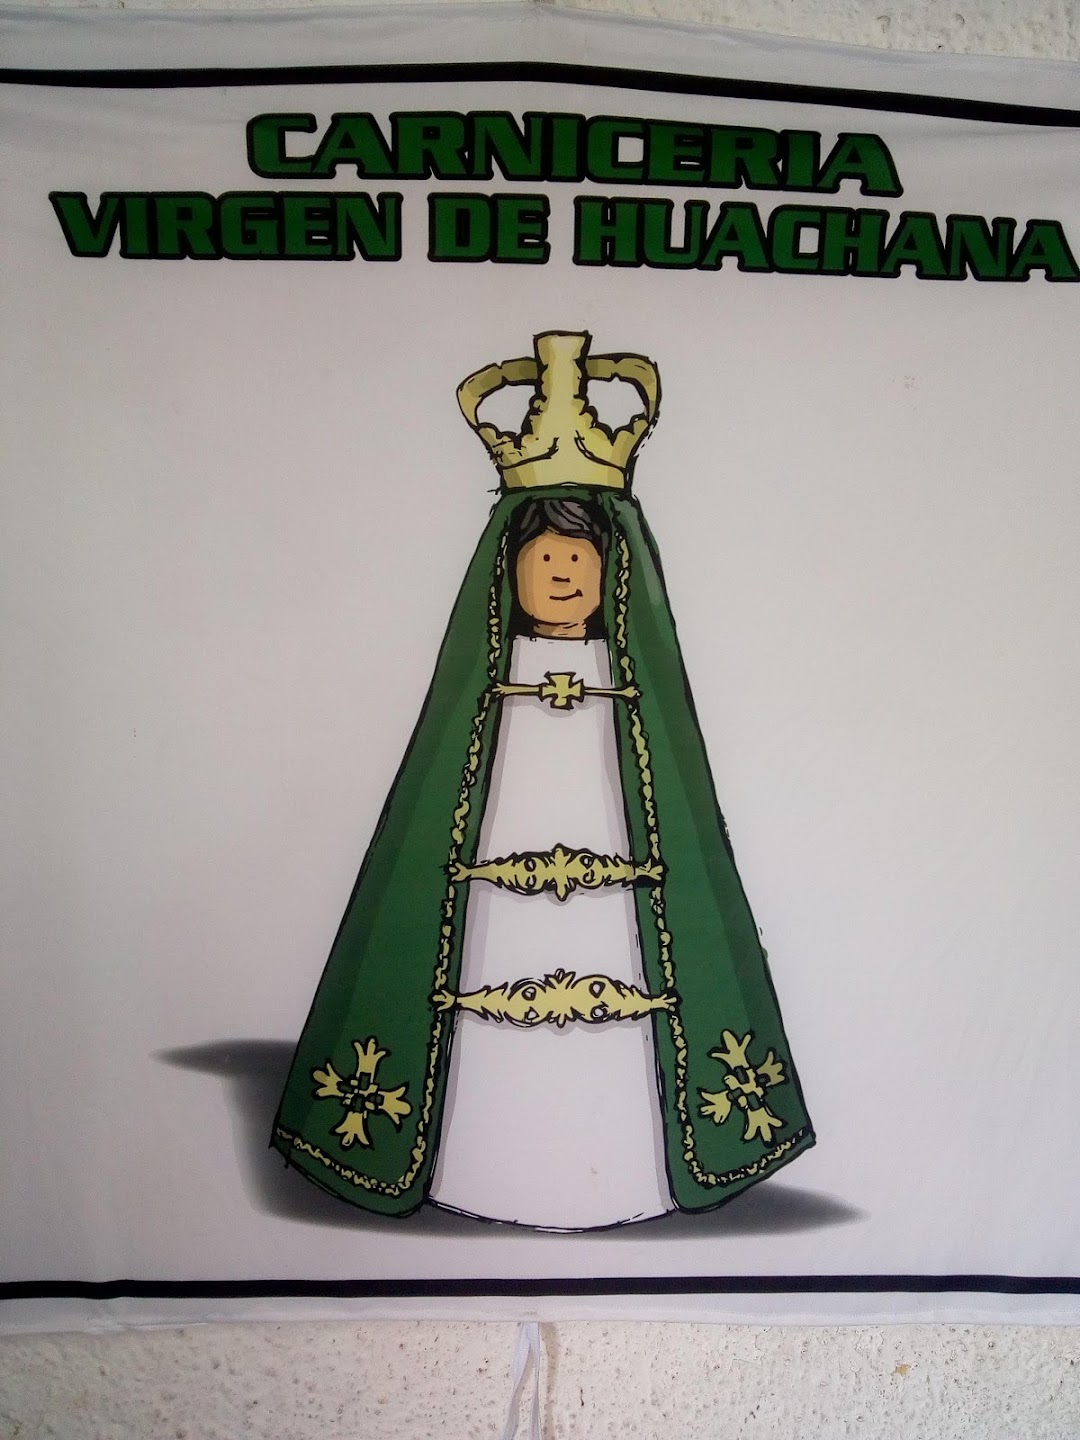 Carniceria Virgen De Huachana